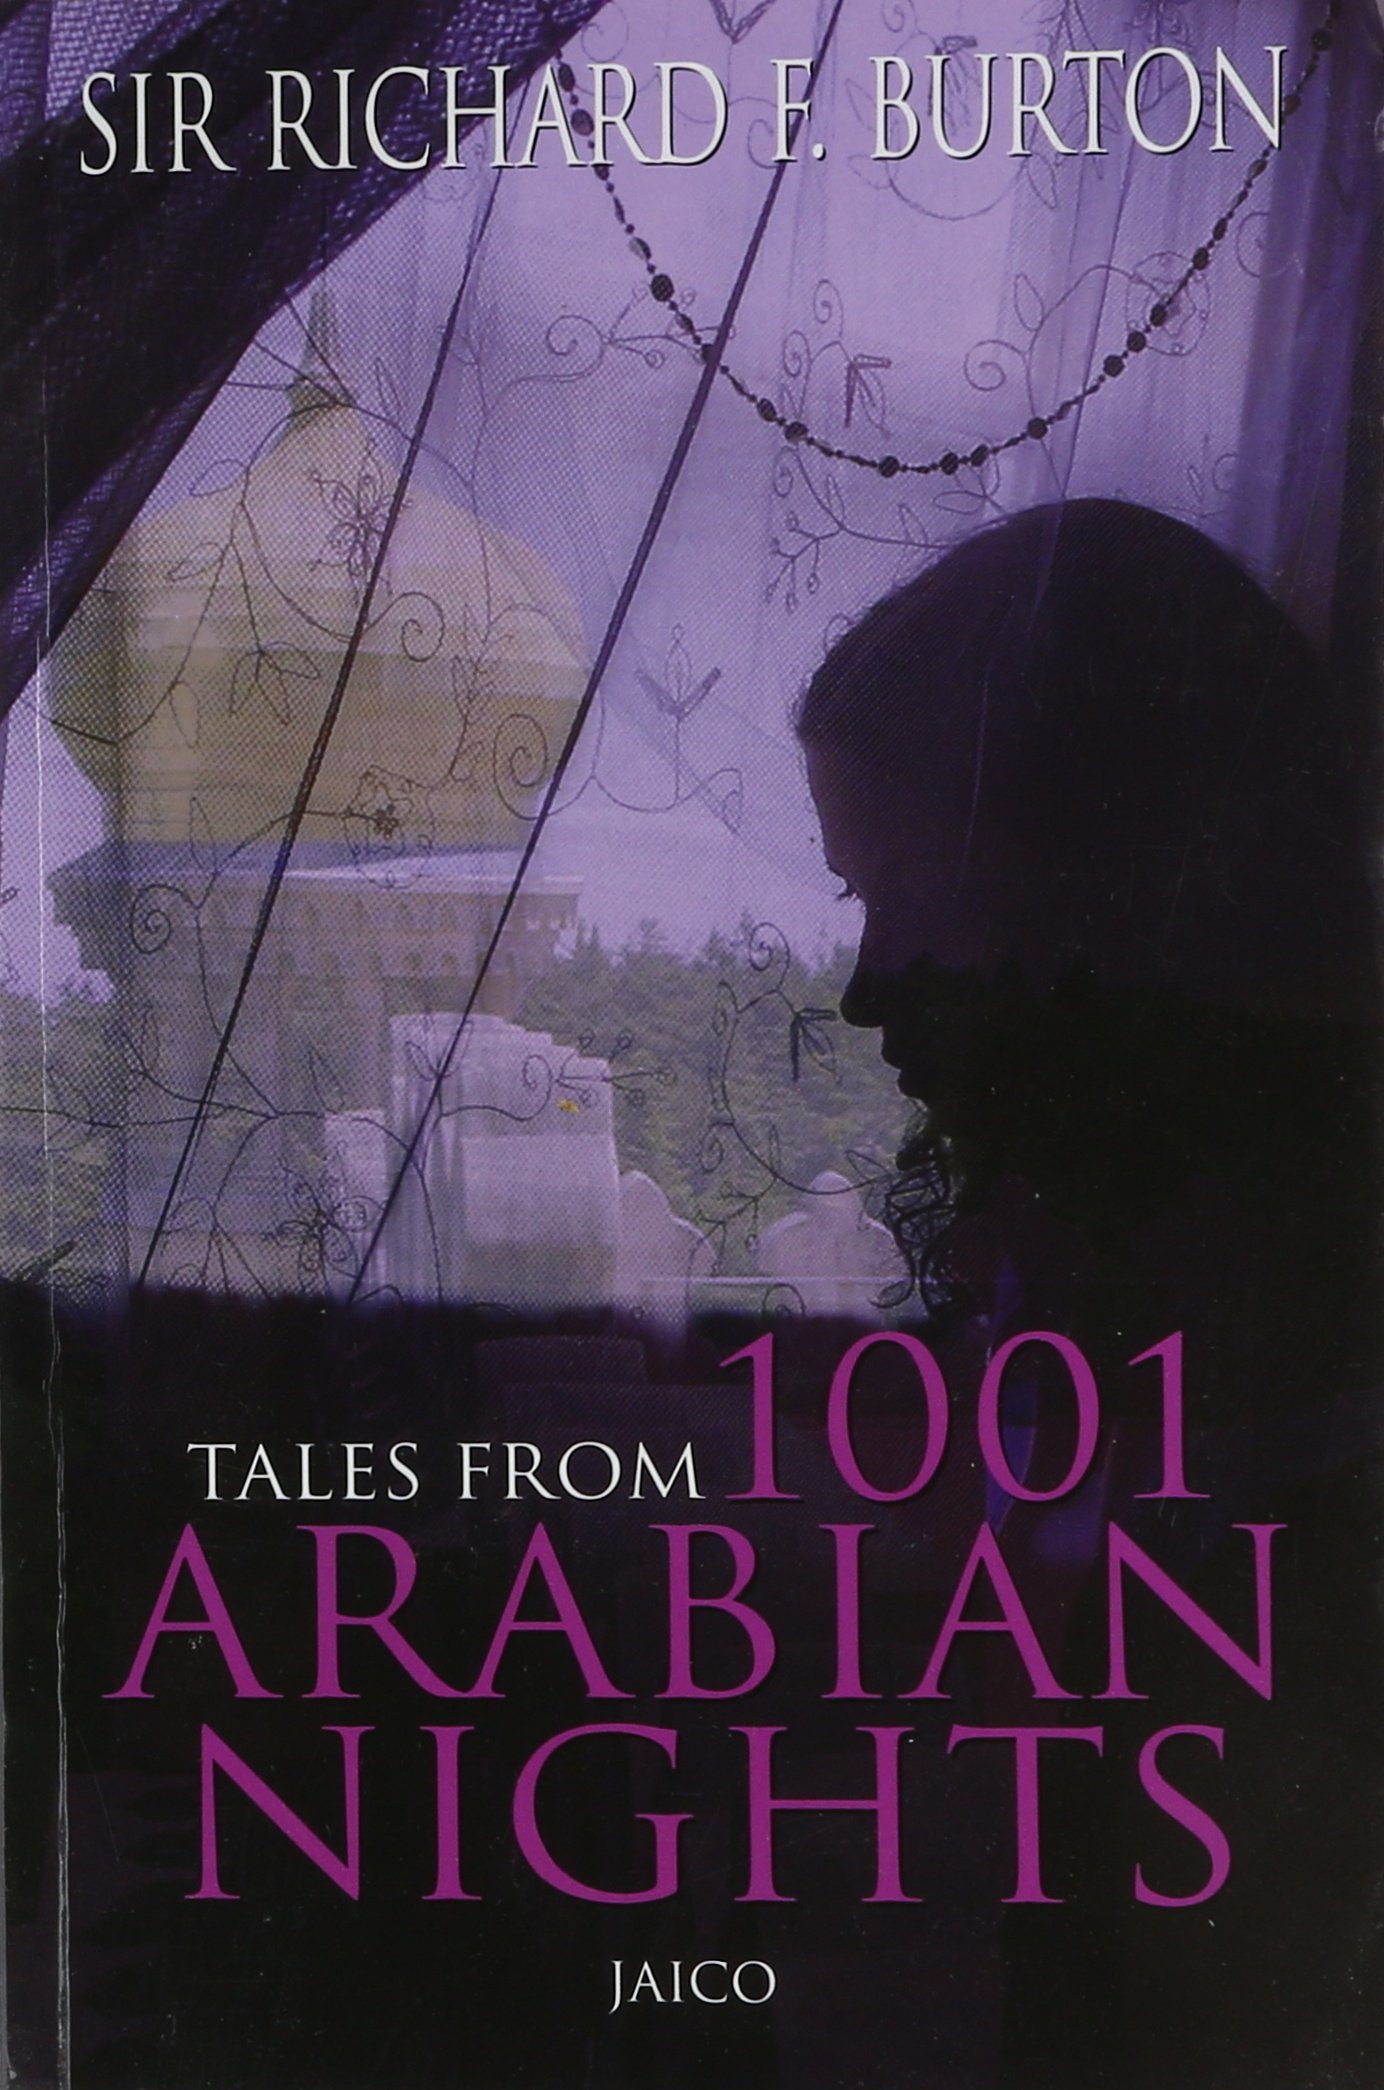 Tales from 1001 Arabian Nights